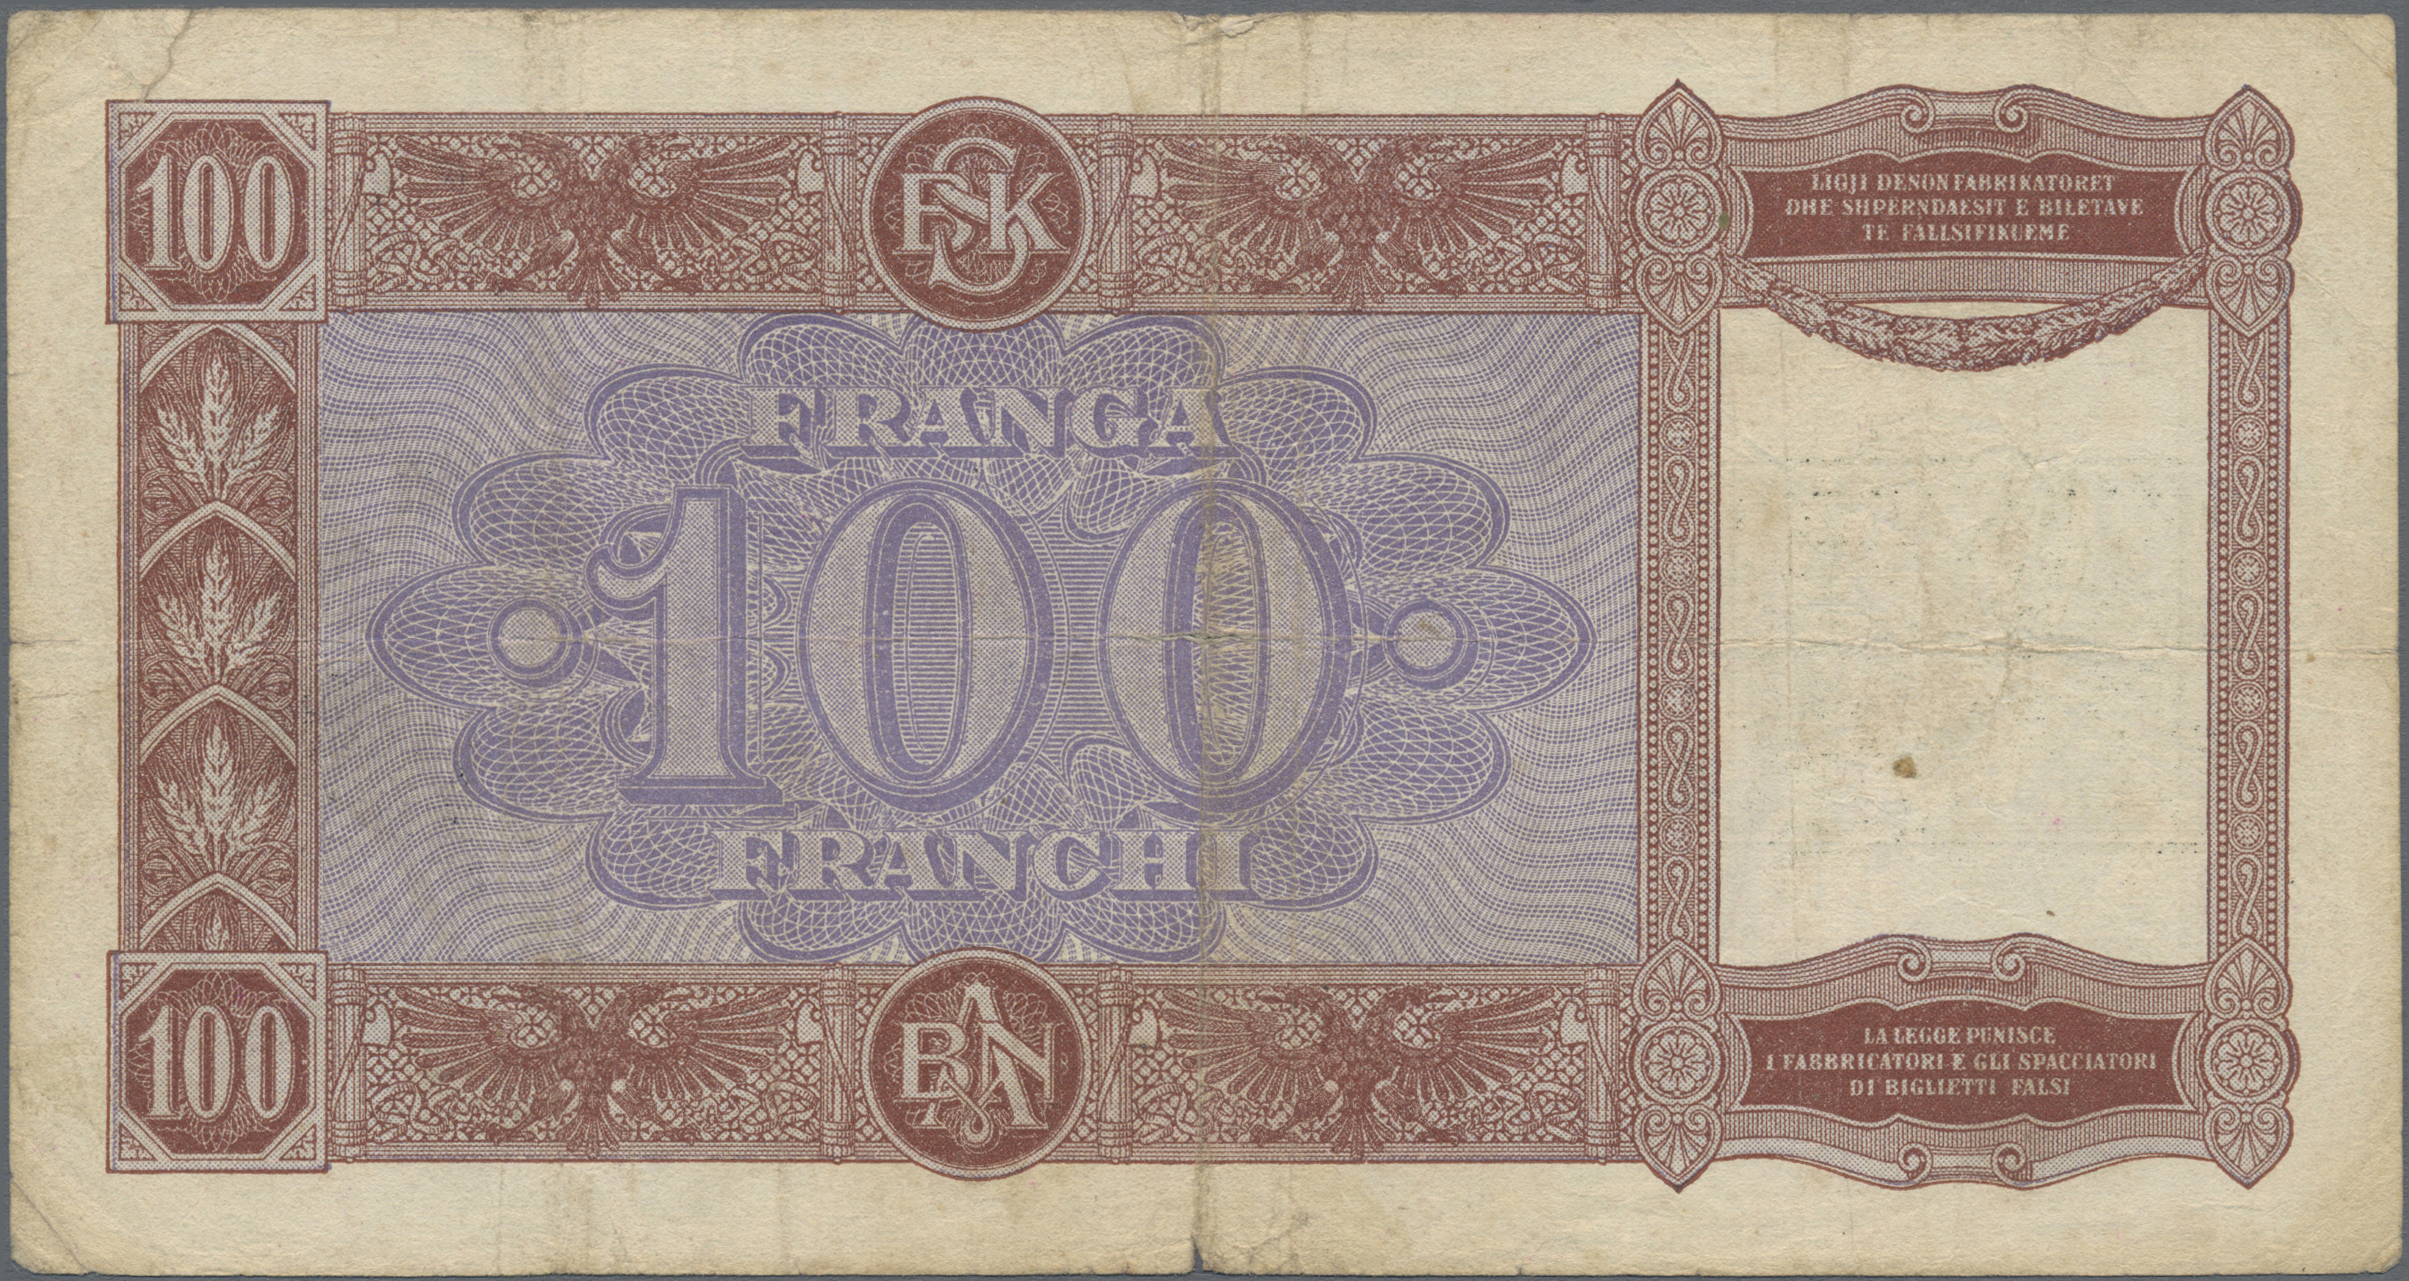 Lot 00102 - Albania / Albanien | Banknoten  -  Auktionshaus Christoph Gärtner GmbH & Co. KG 56th AUCTION - Day 1